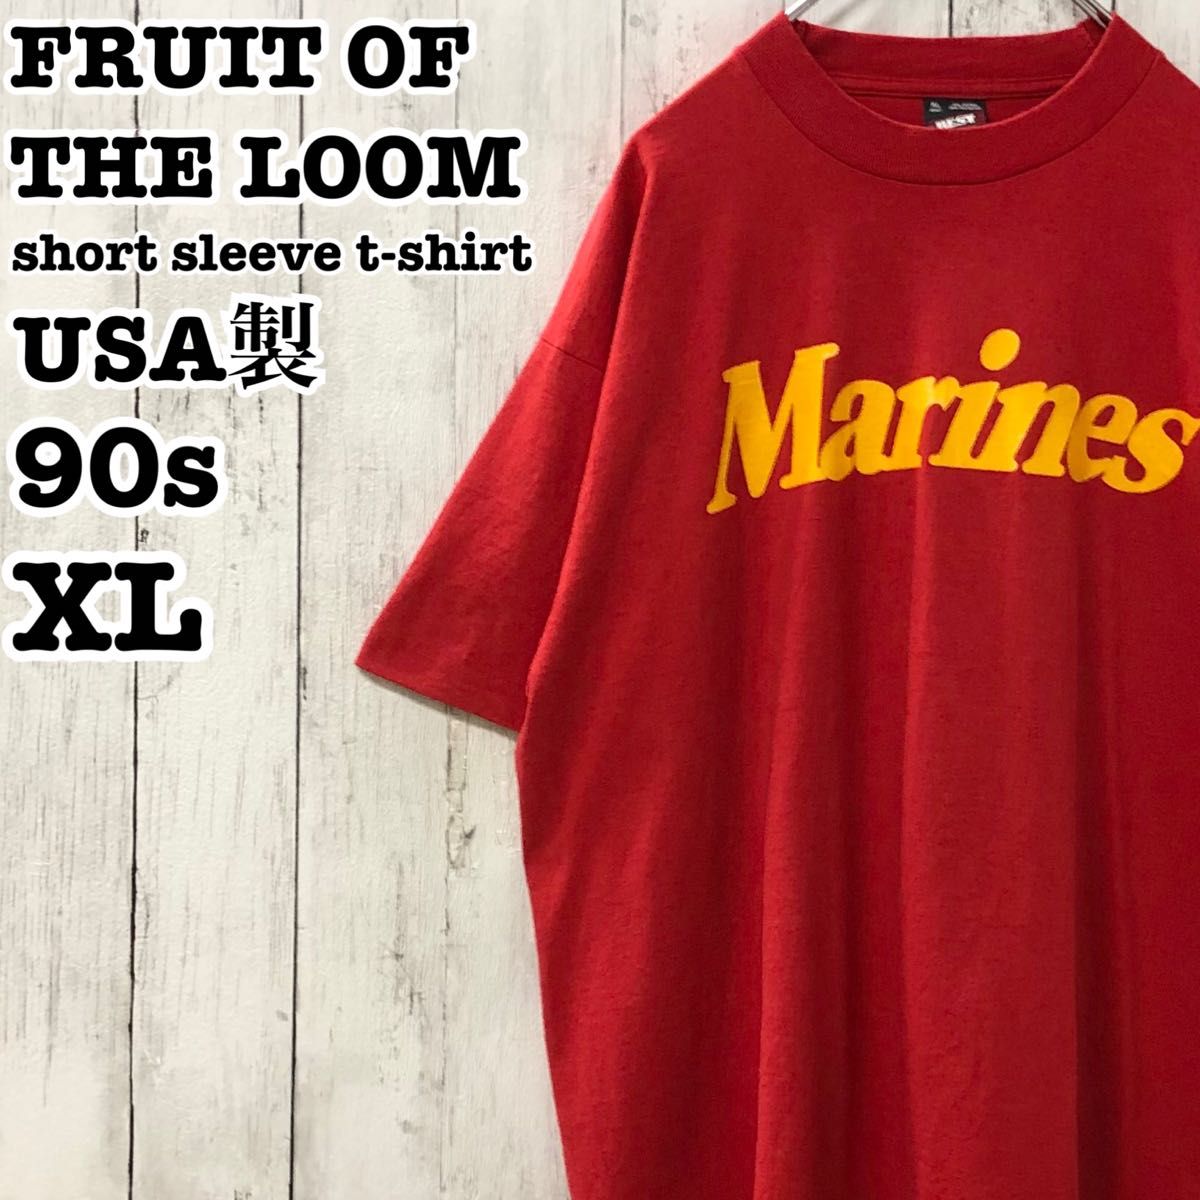 90s フルーツオブザルーム USA製 アメリカ古着 英字 Marines プリント 半袖Tシャツ XL